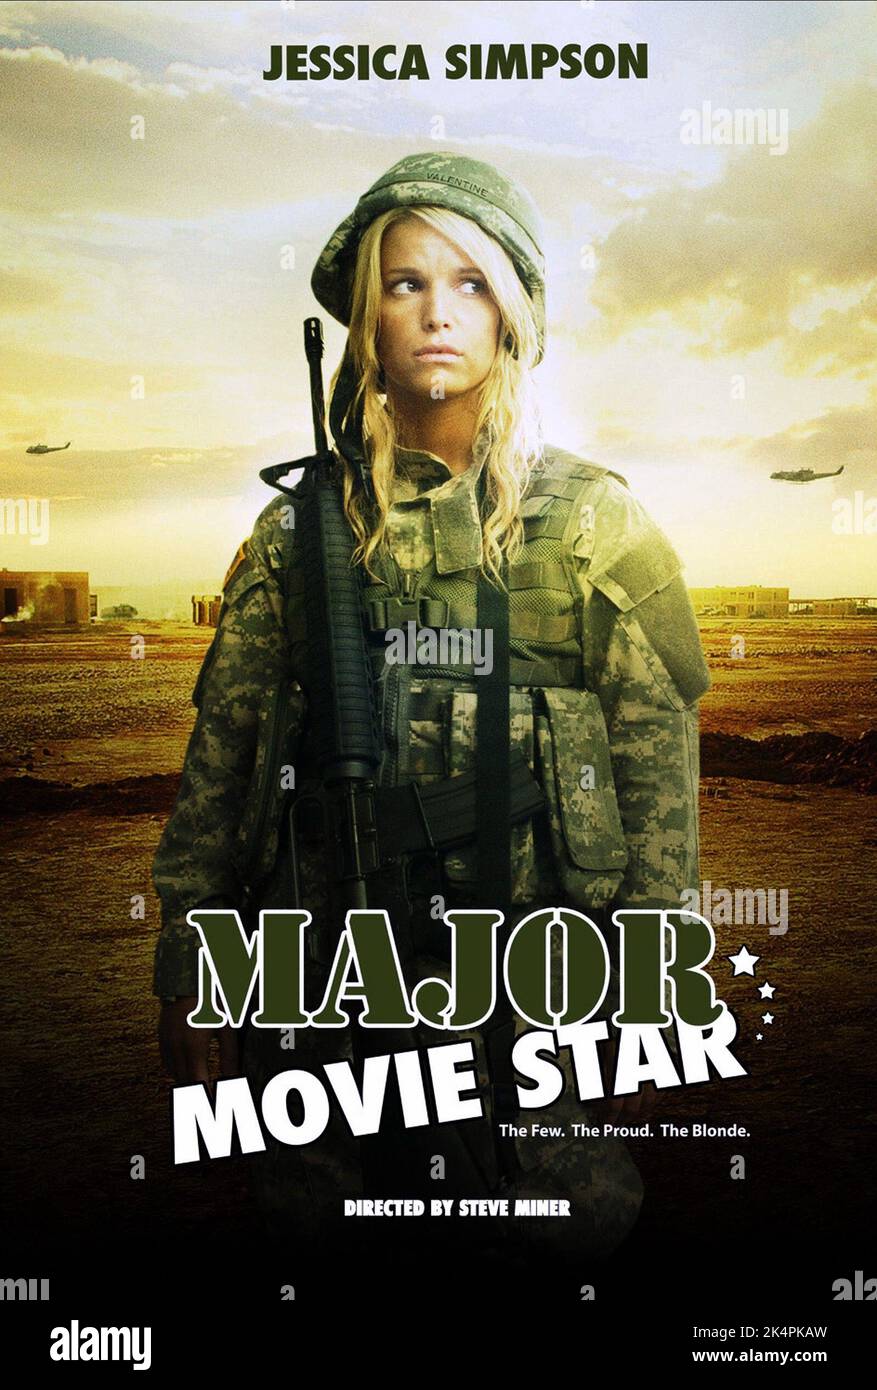 Jessica Simpson is a Major Movie Star: Photo 145331